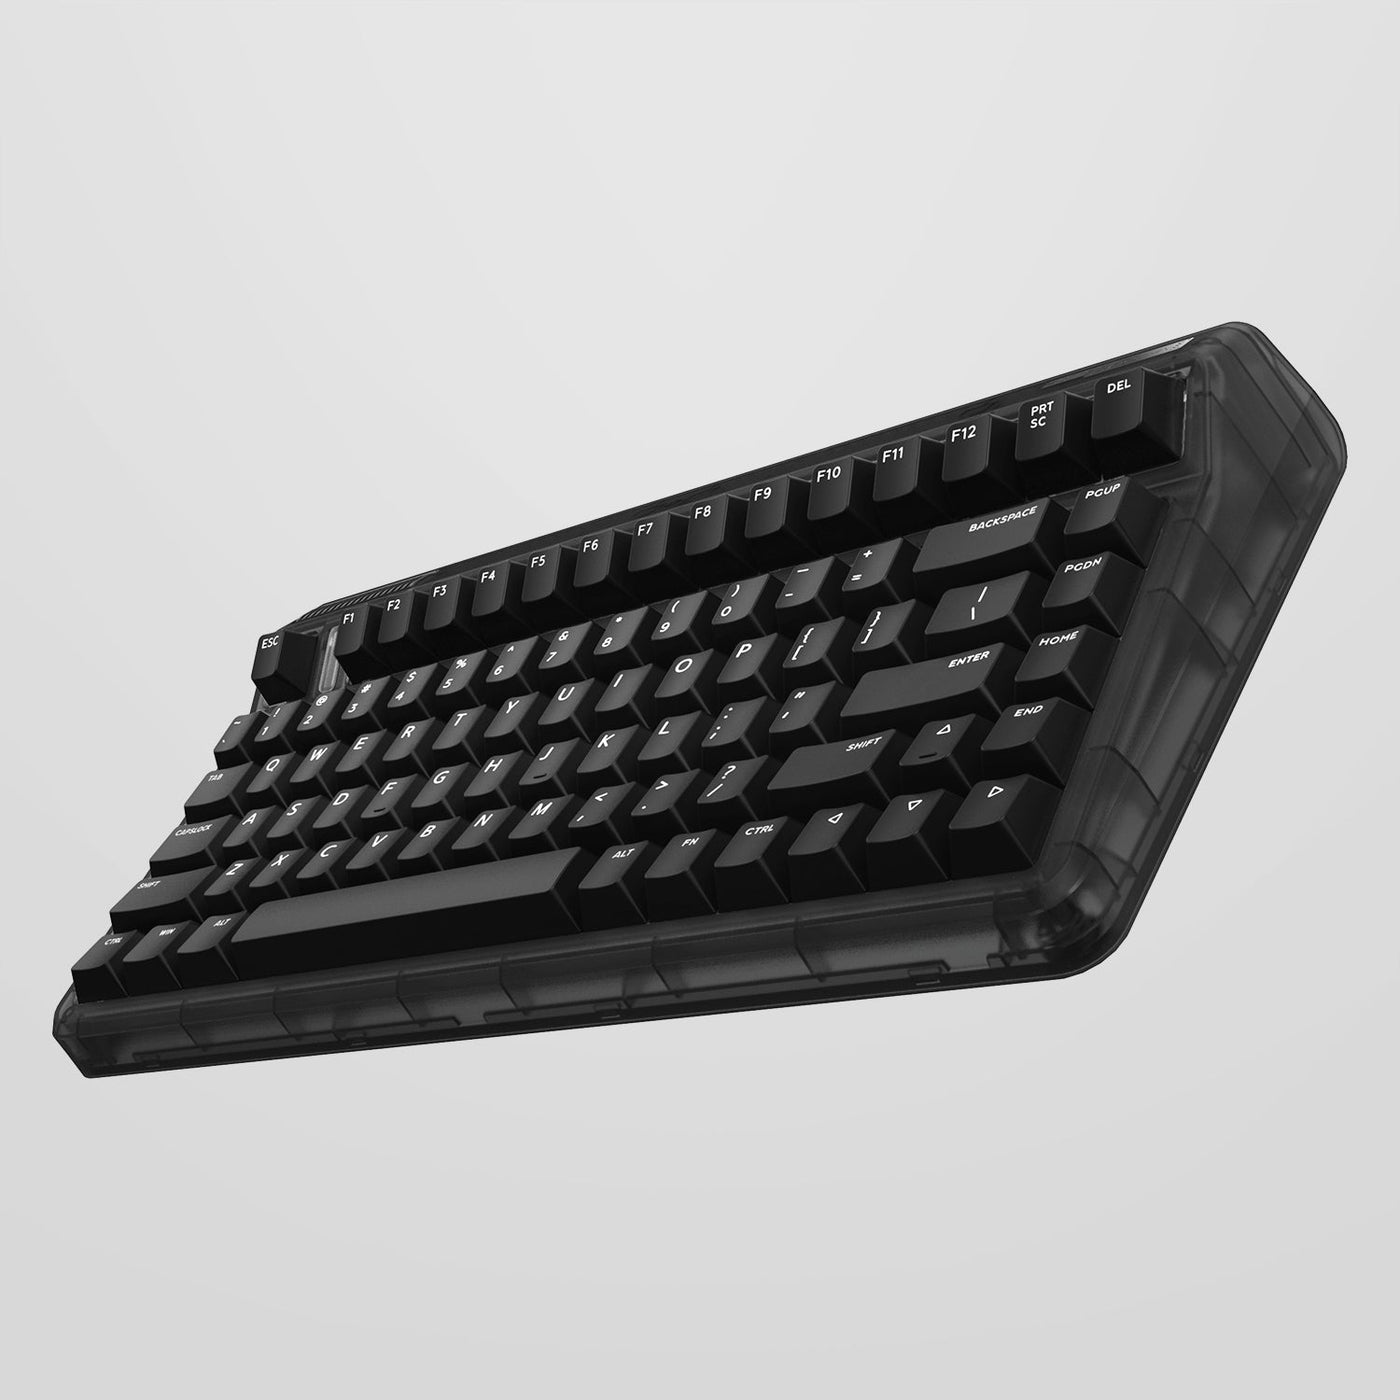 IQUNIX OG80 Dark Side Wireless Mechanical Keyboard